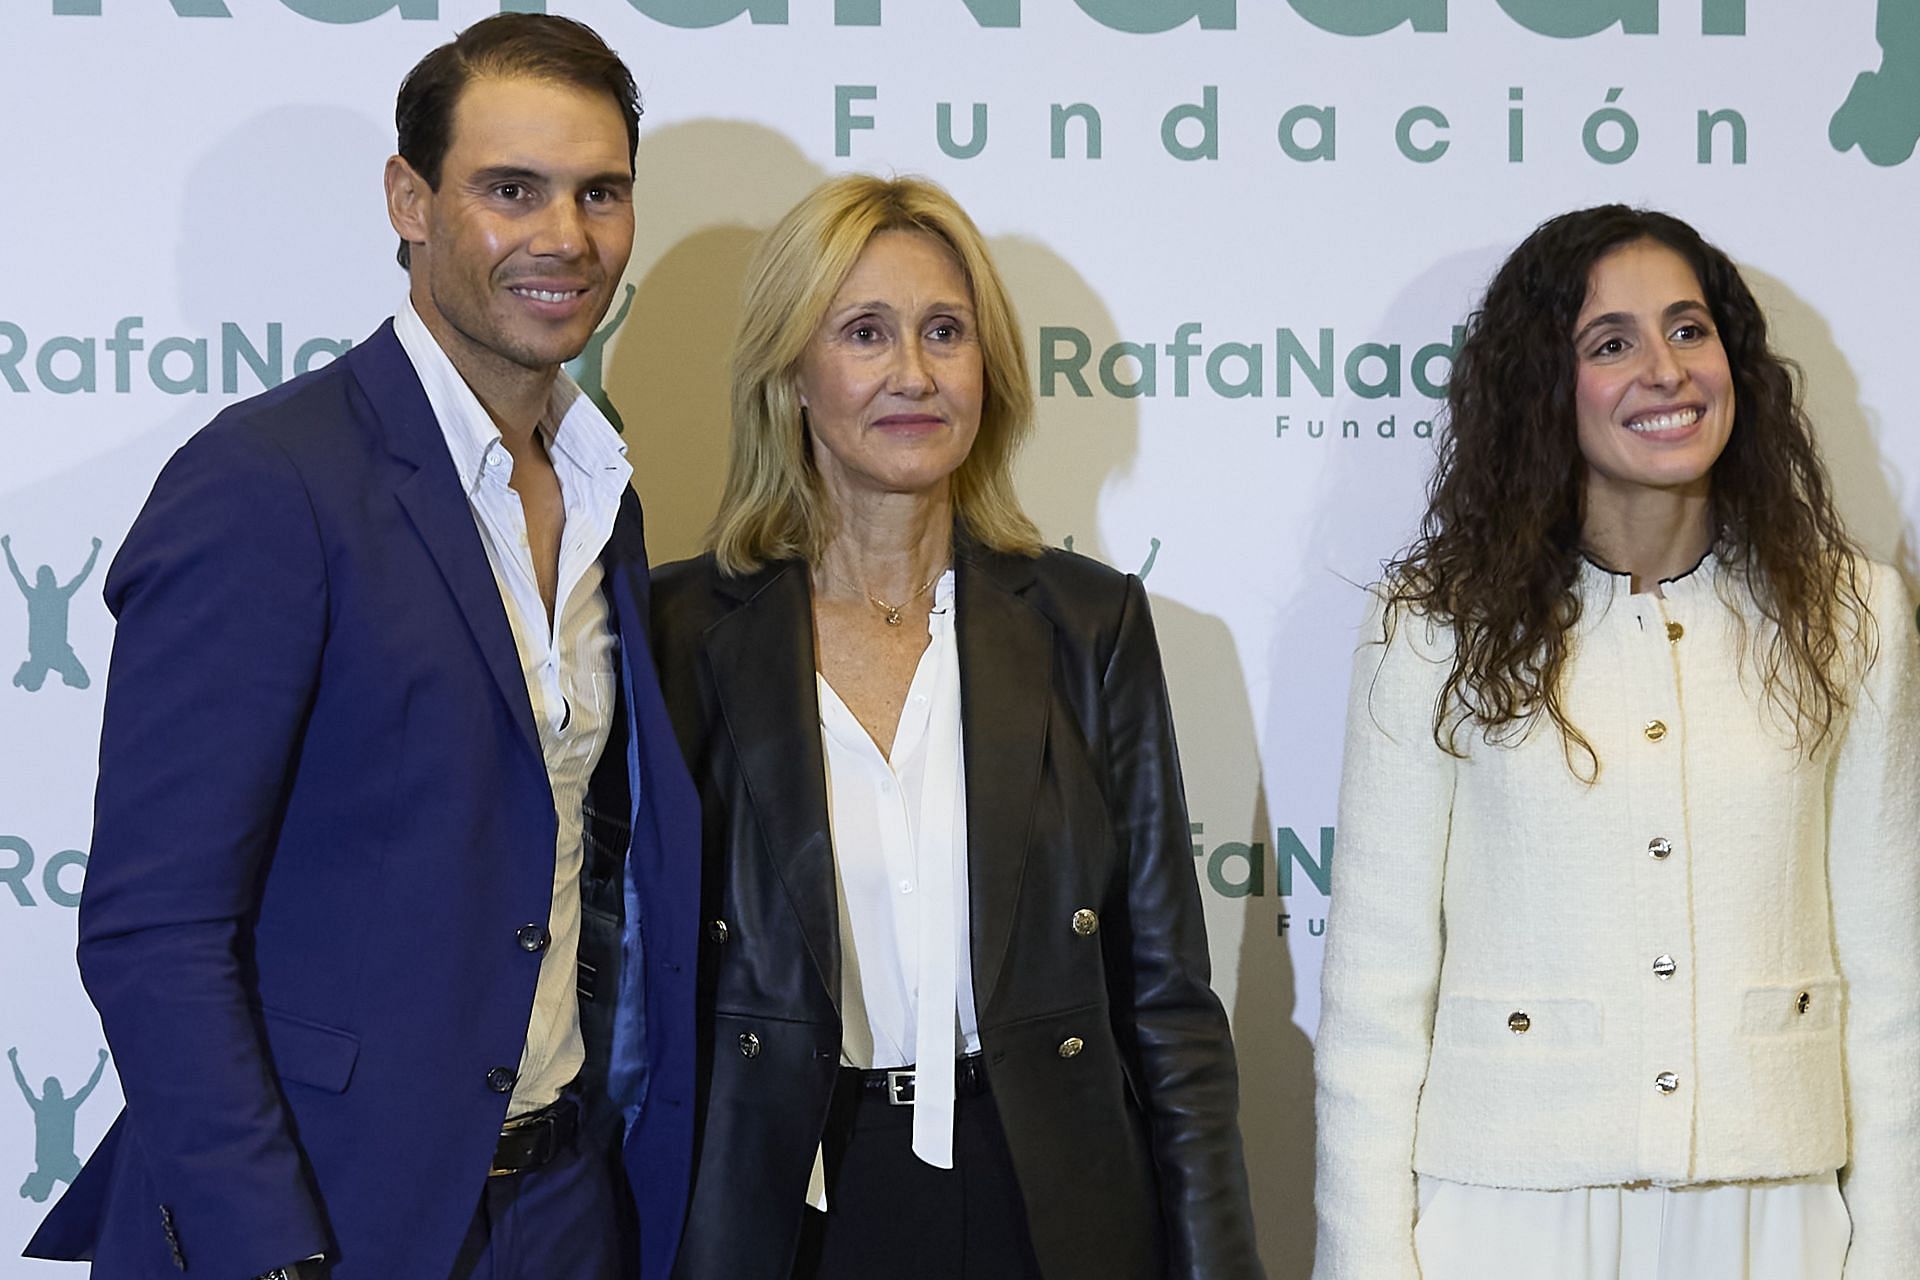 Rafael Nadal with his wife Maria Francisca Perello (extreme right)